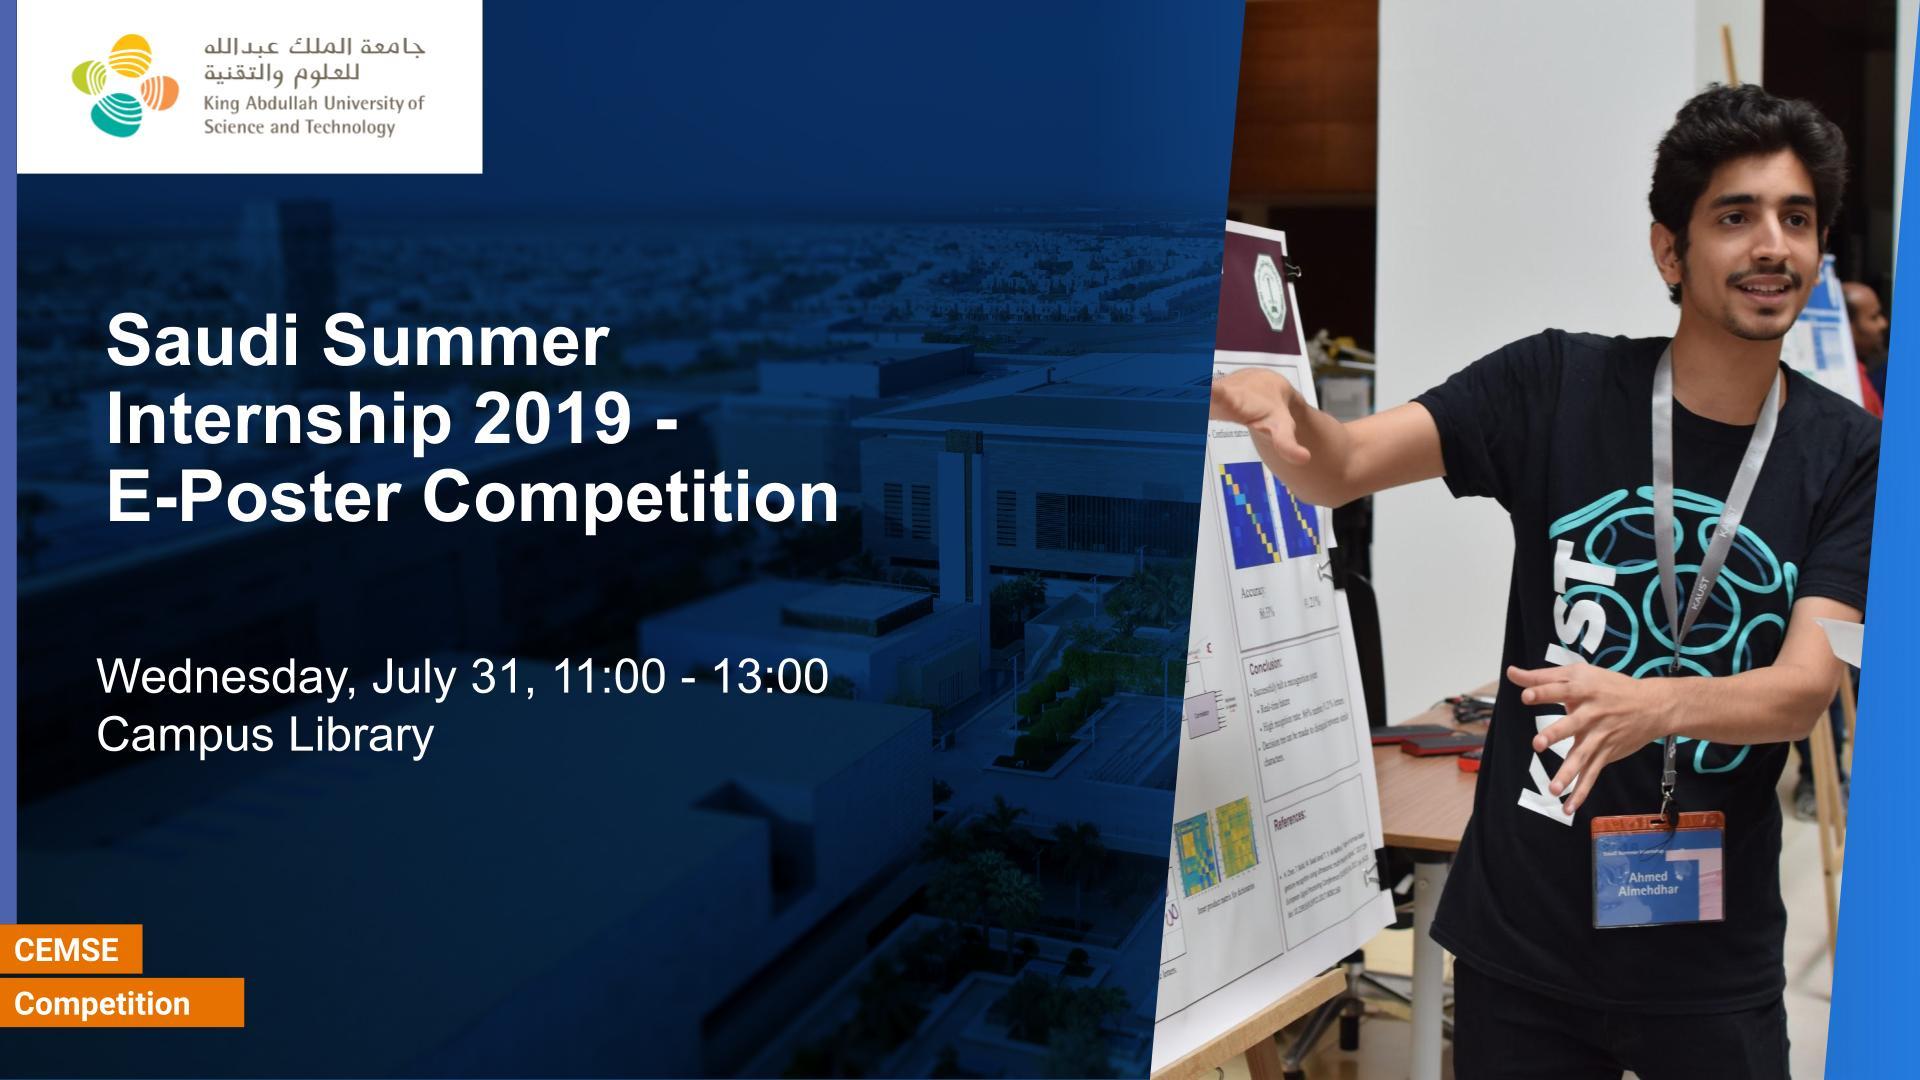 KAUST CEMSE Saudi Summer Internship 2019 E-Poster Competition